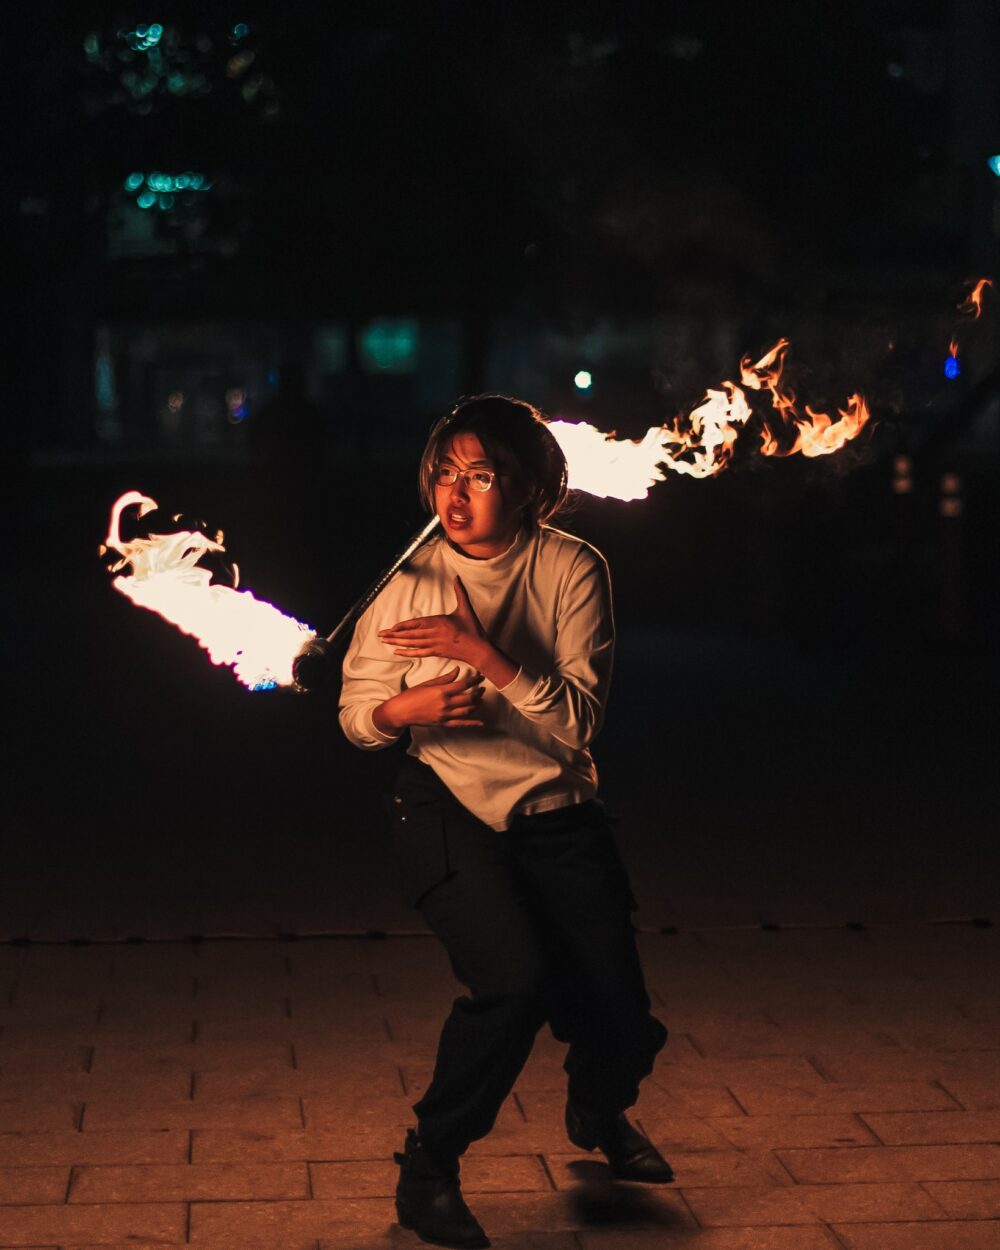 woman fire spinning a dragon staff